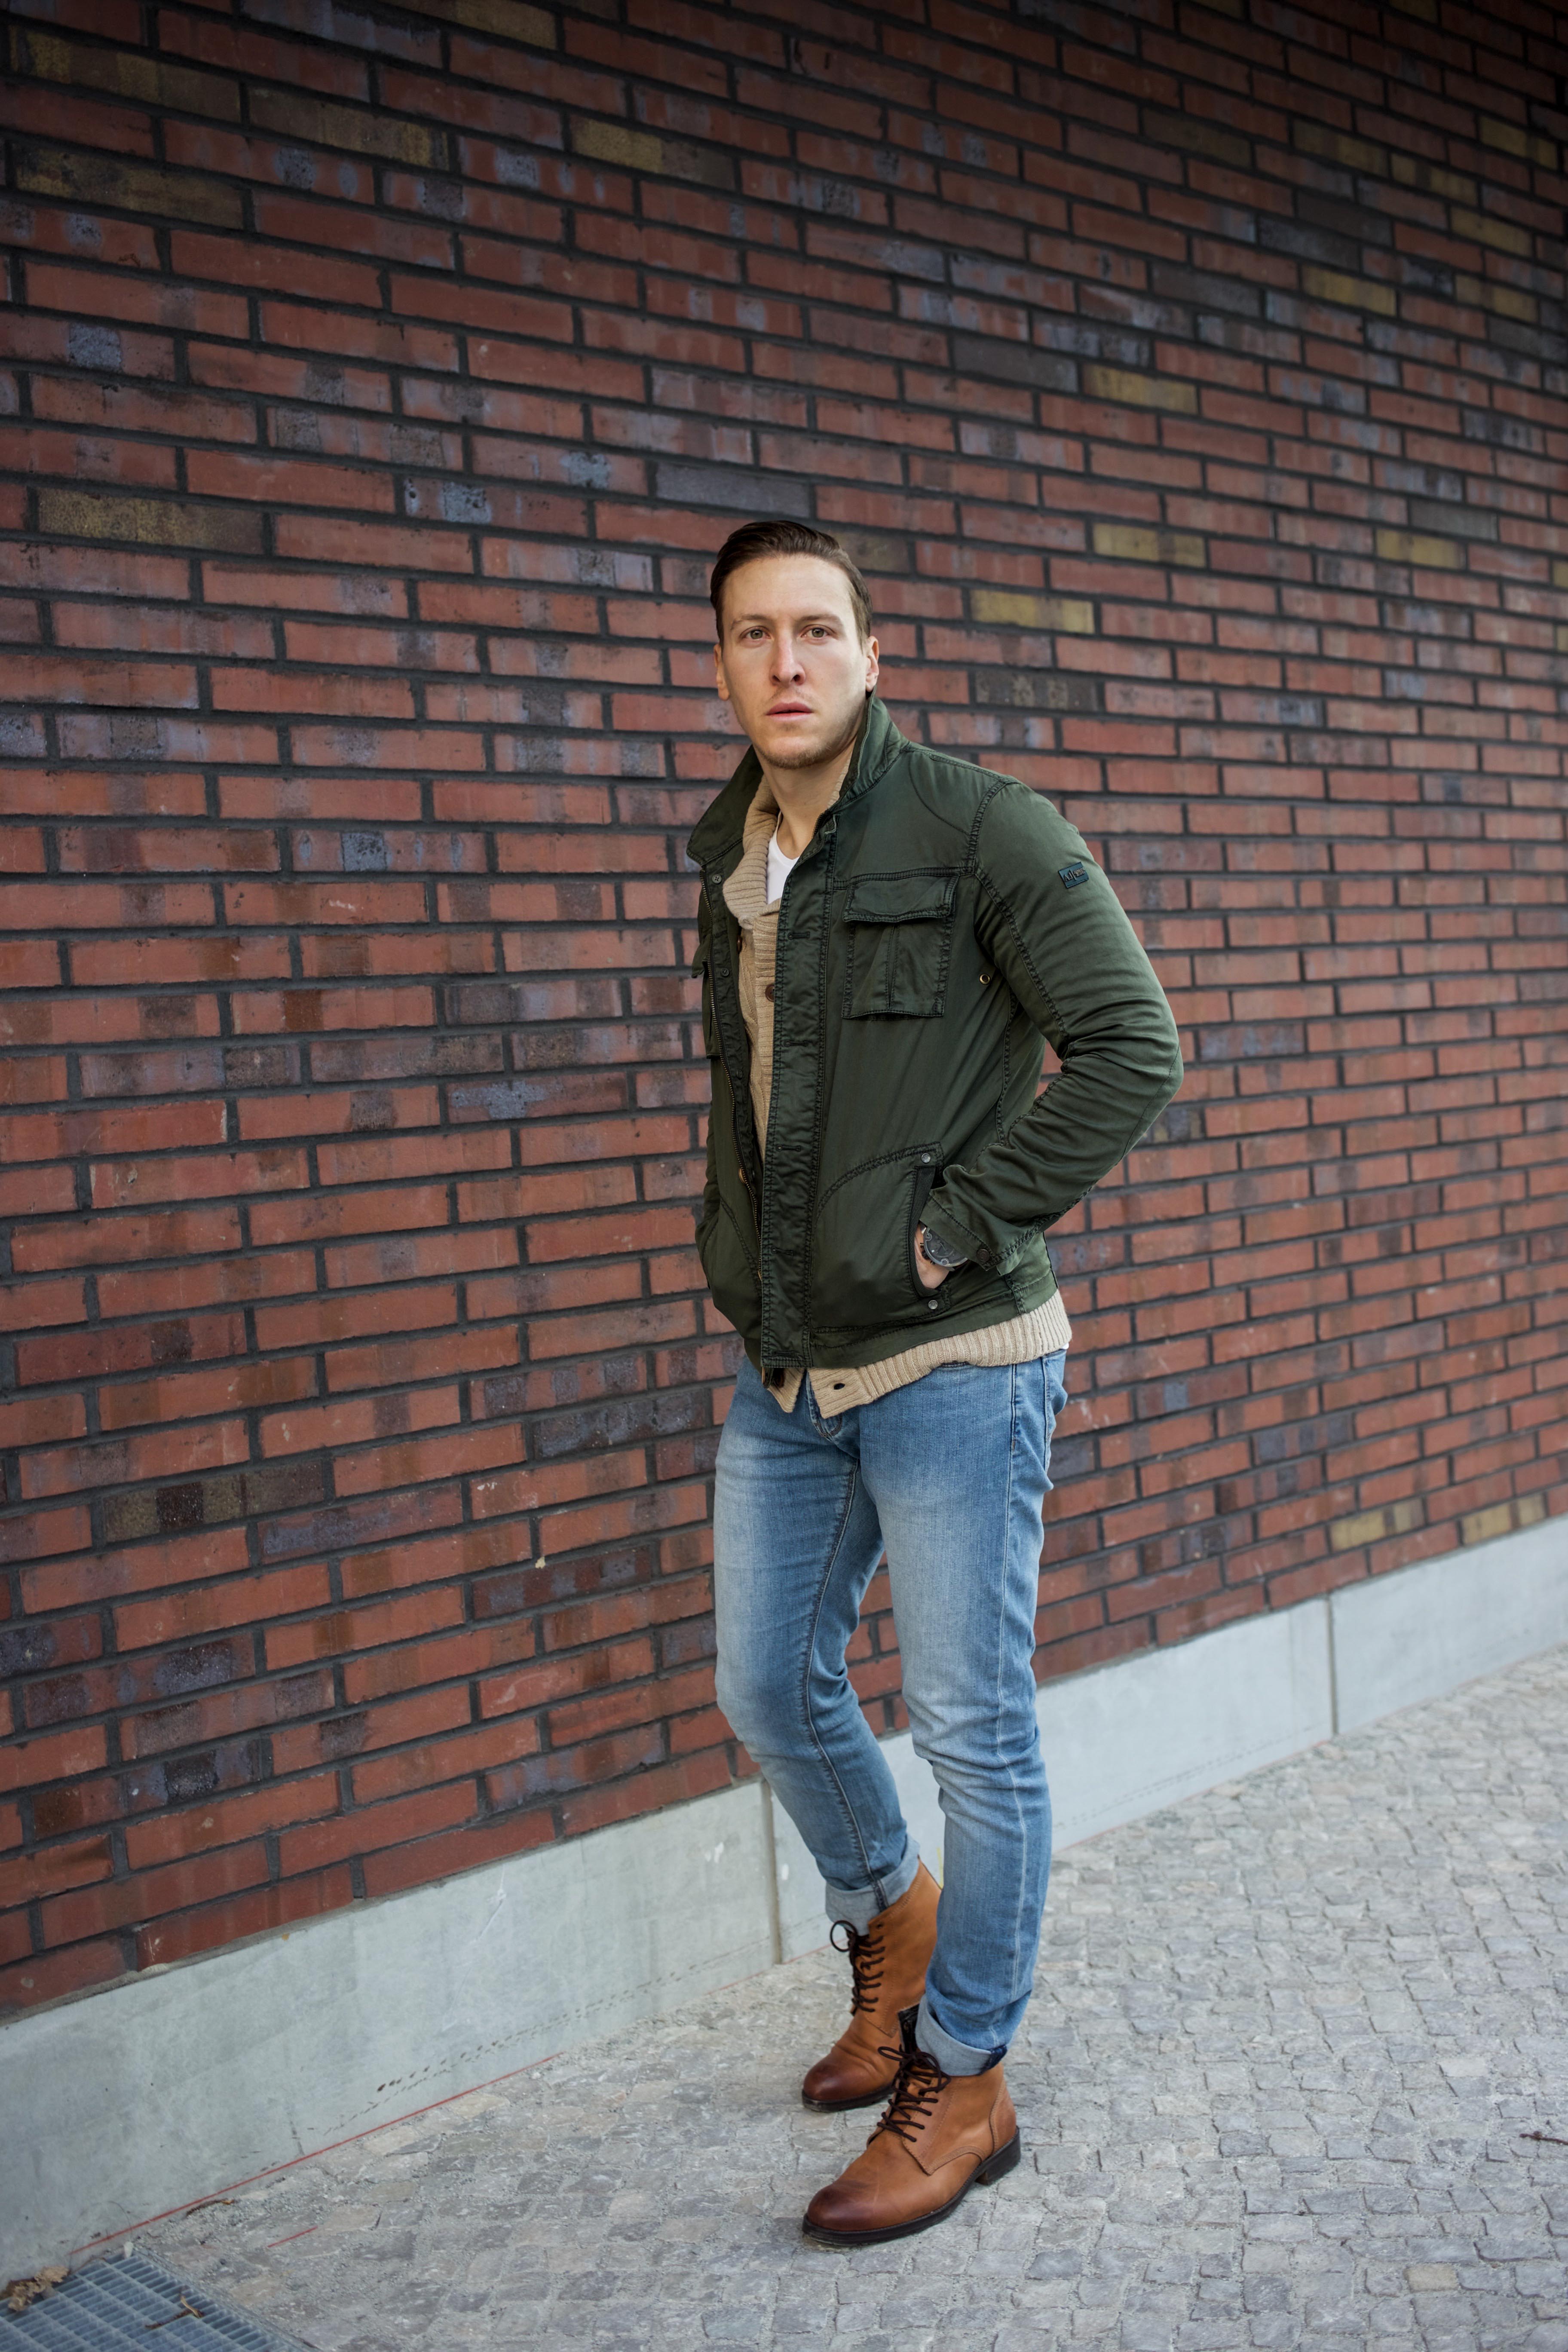 Strickjacke Kombinieren Blue Jeans Und Lederboots Manner Modeblog Berlin